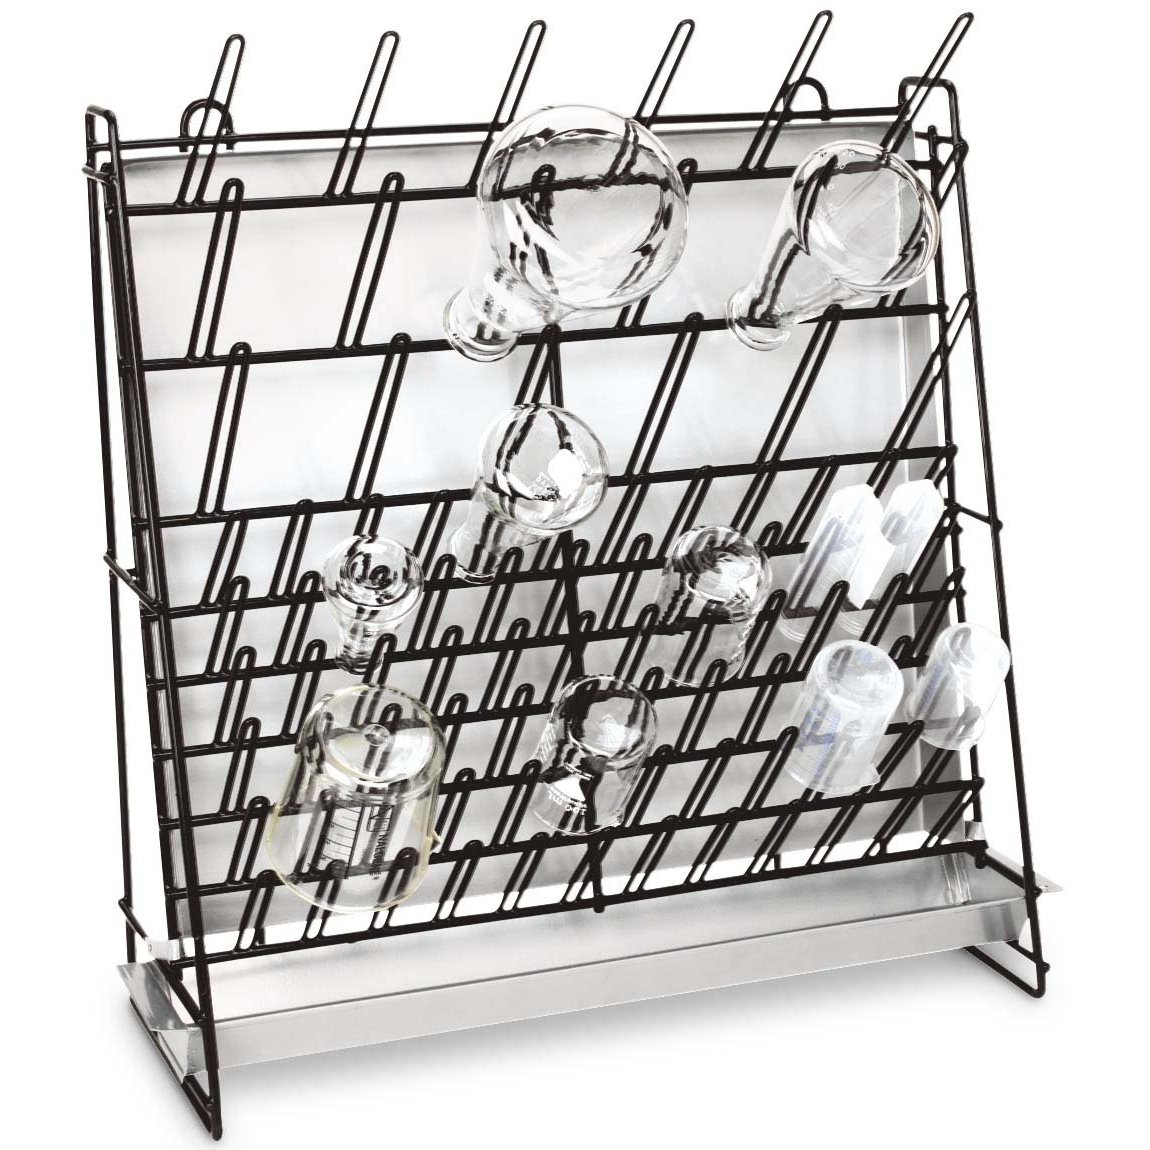 Laboratory drying rack - Wikipedia